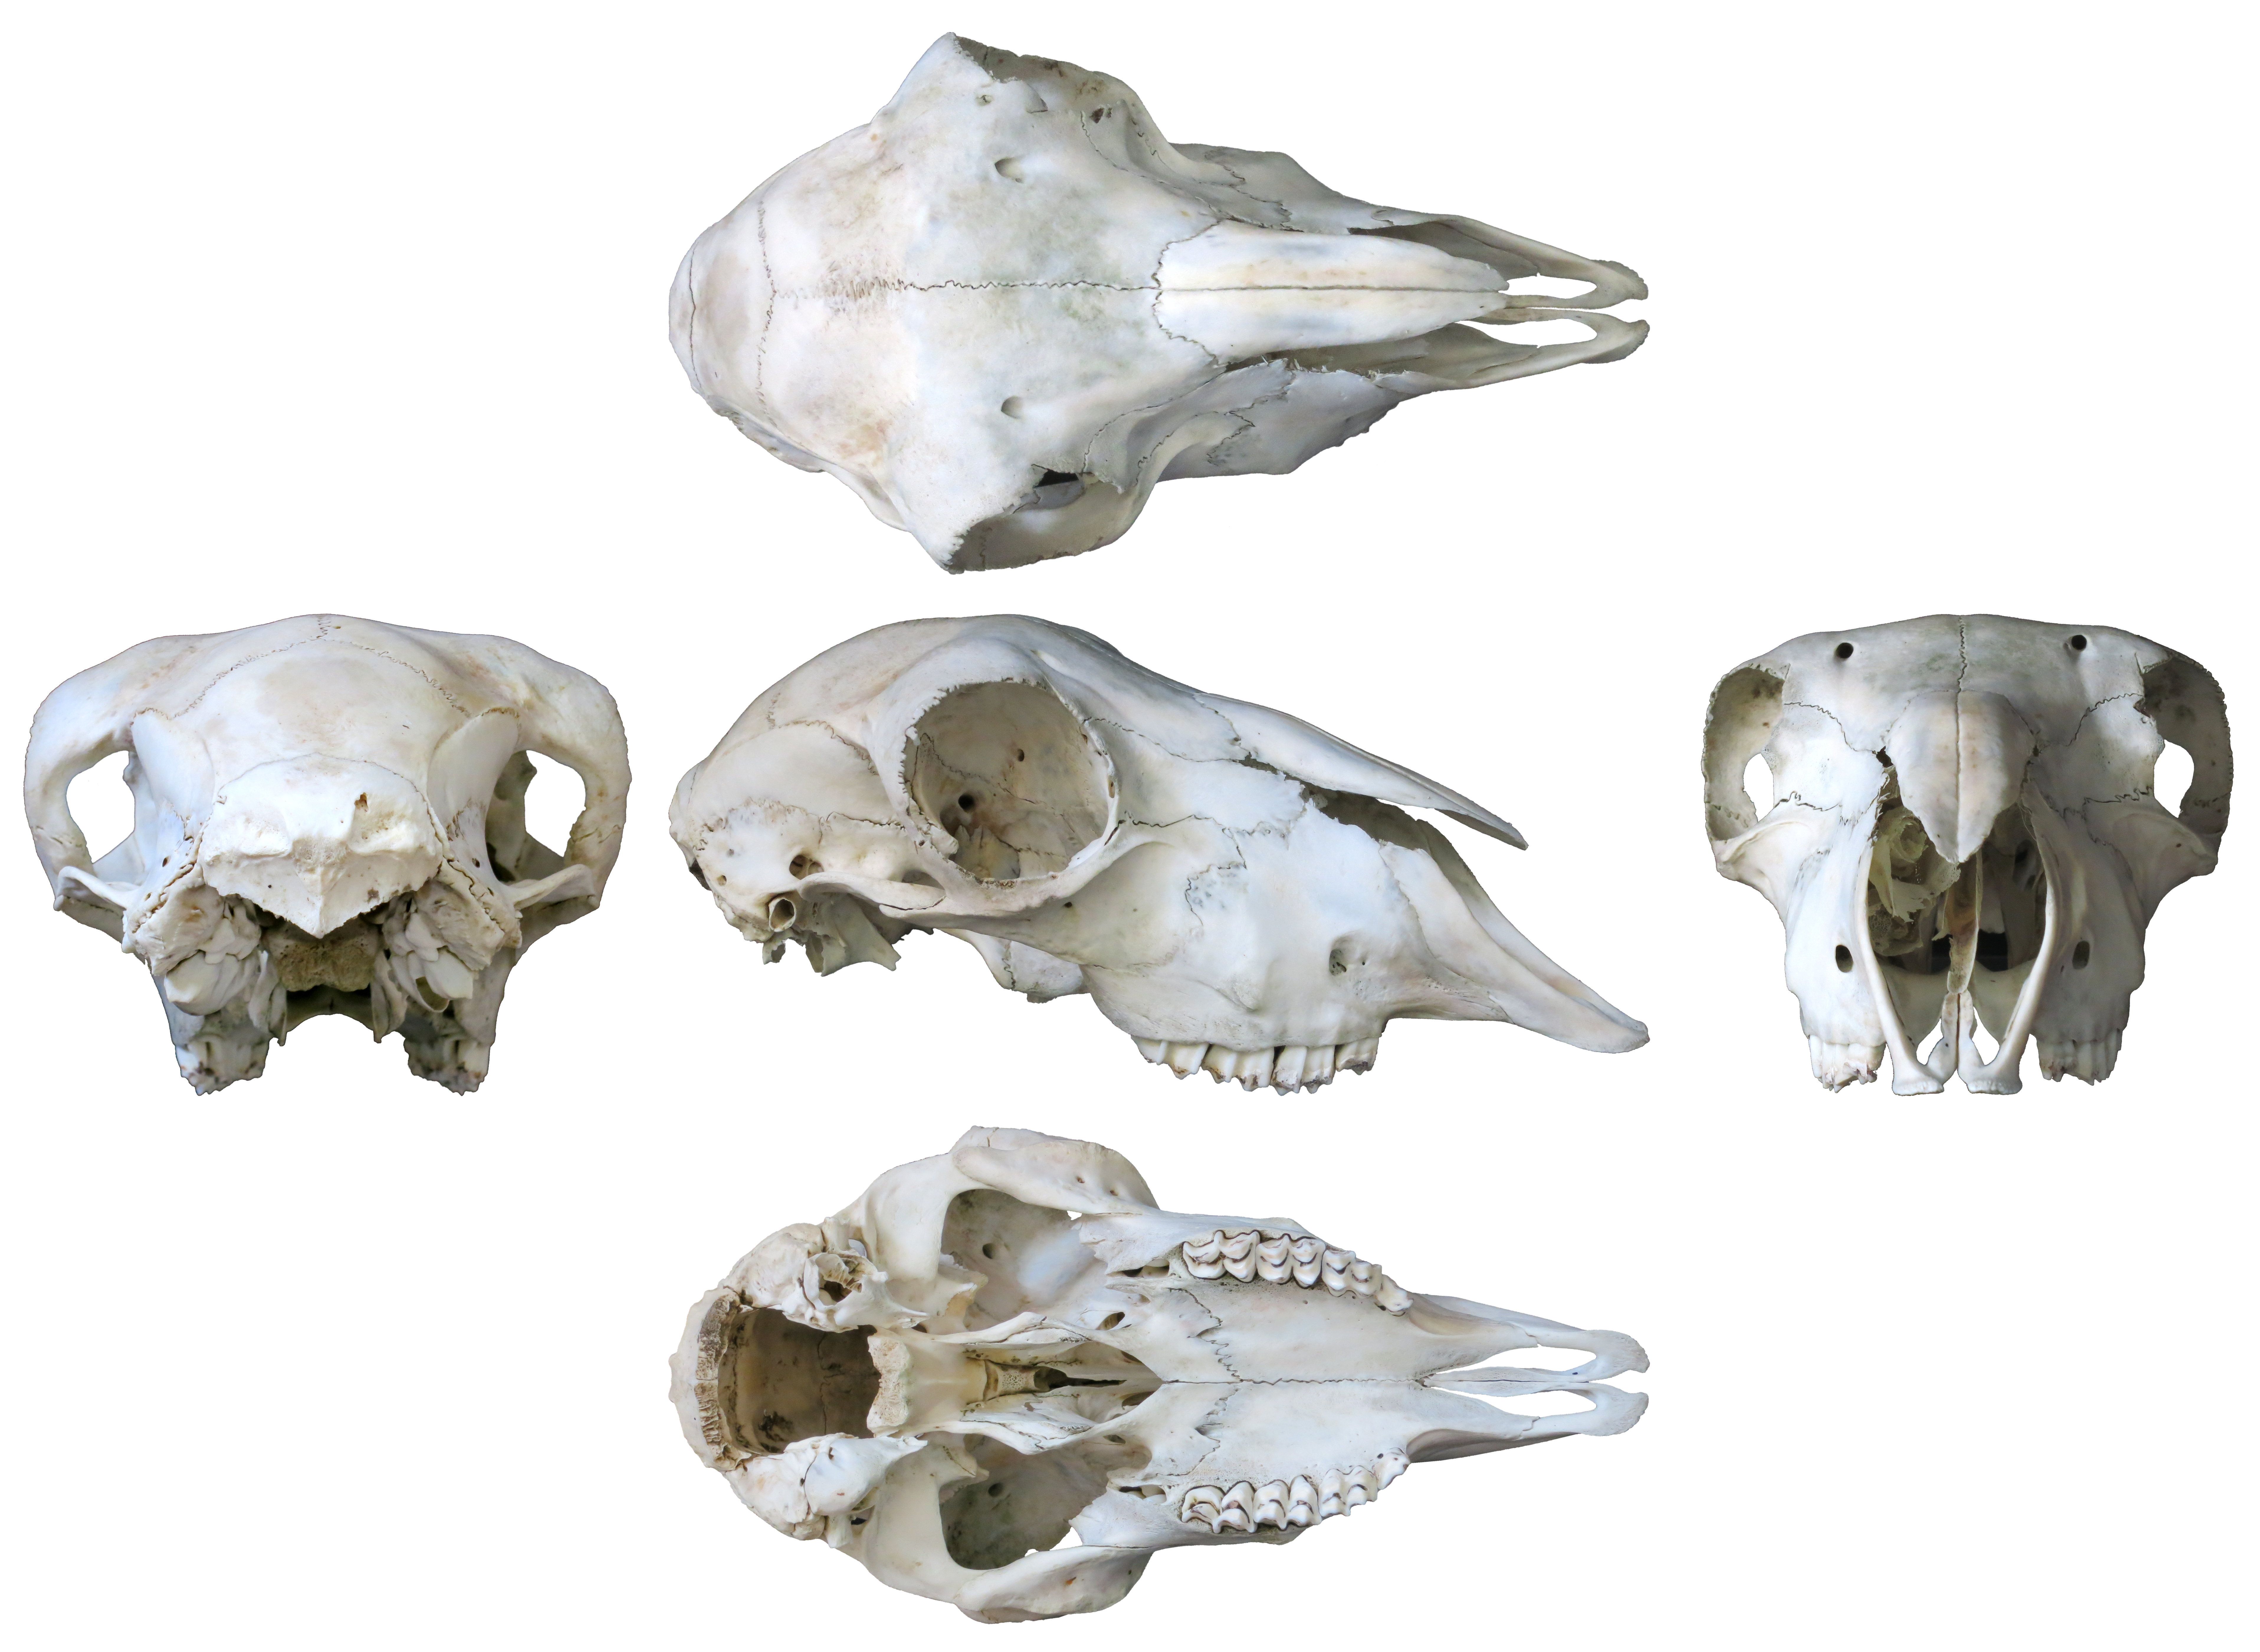 Here's That Sheep Skull Multiview You Ordered. Sauropod Vertebra